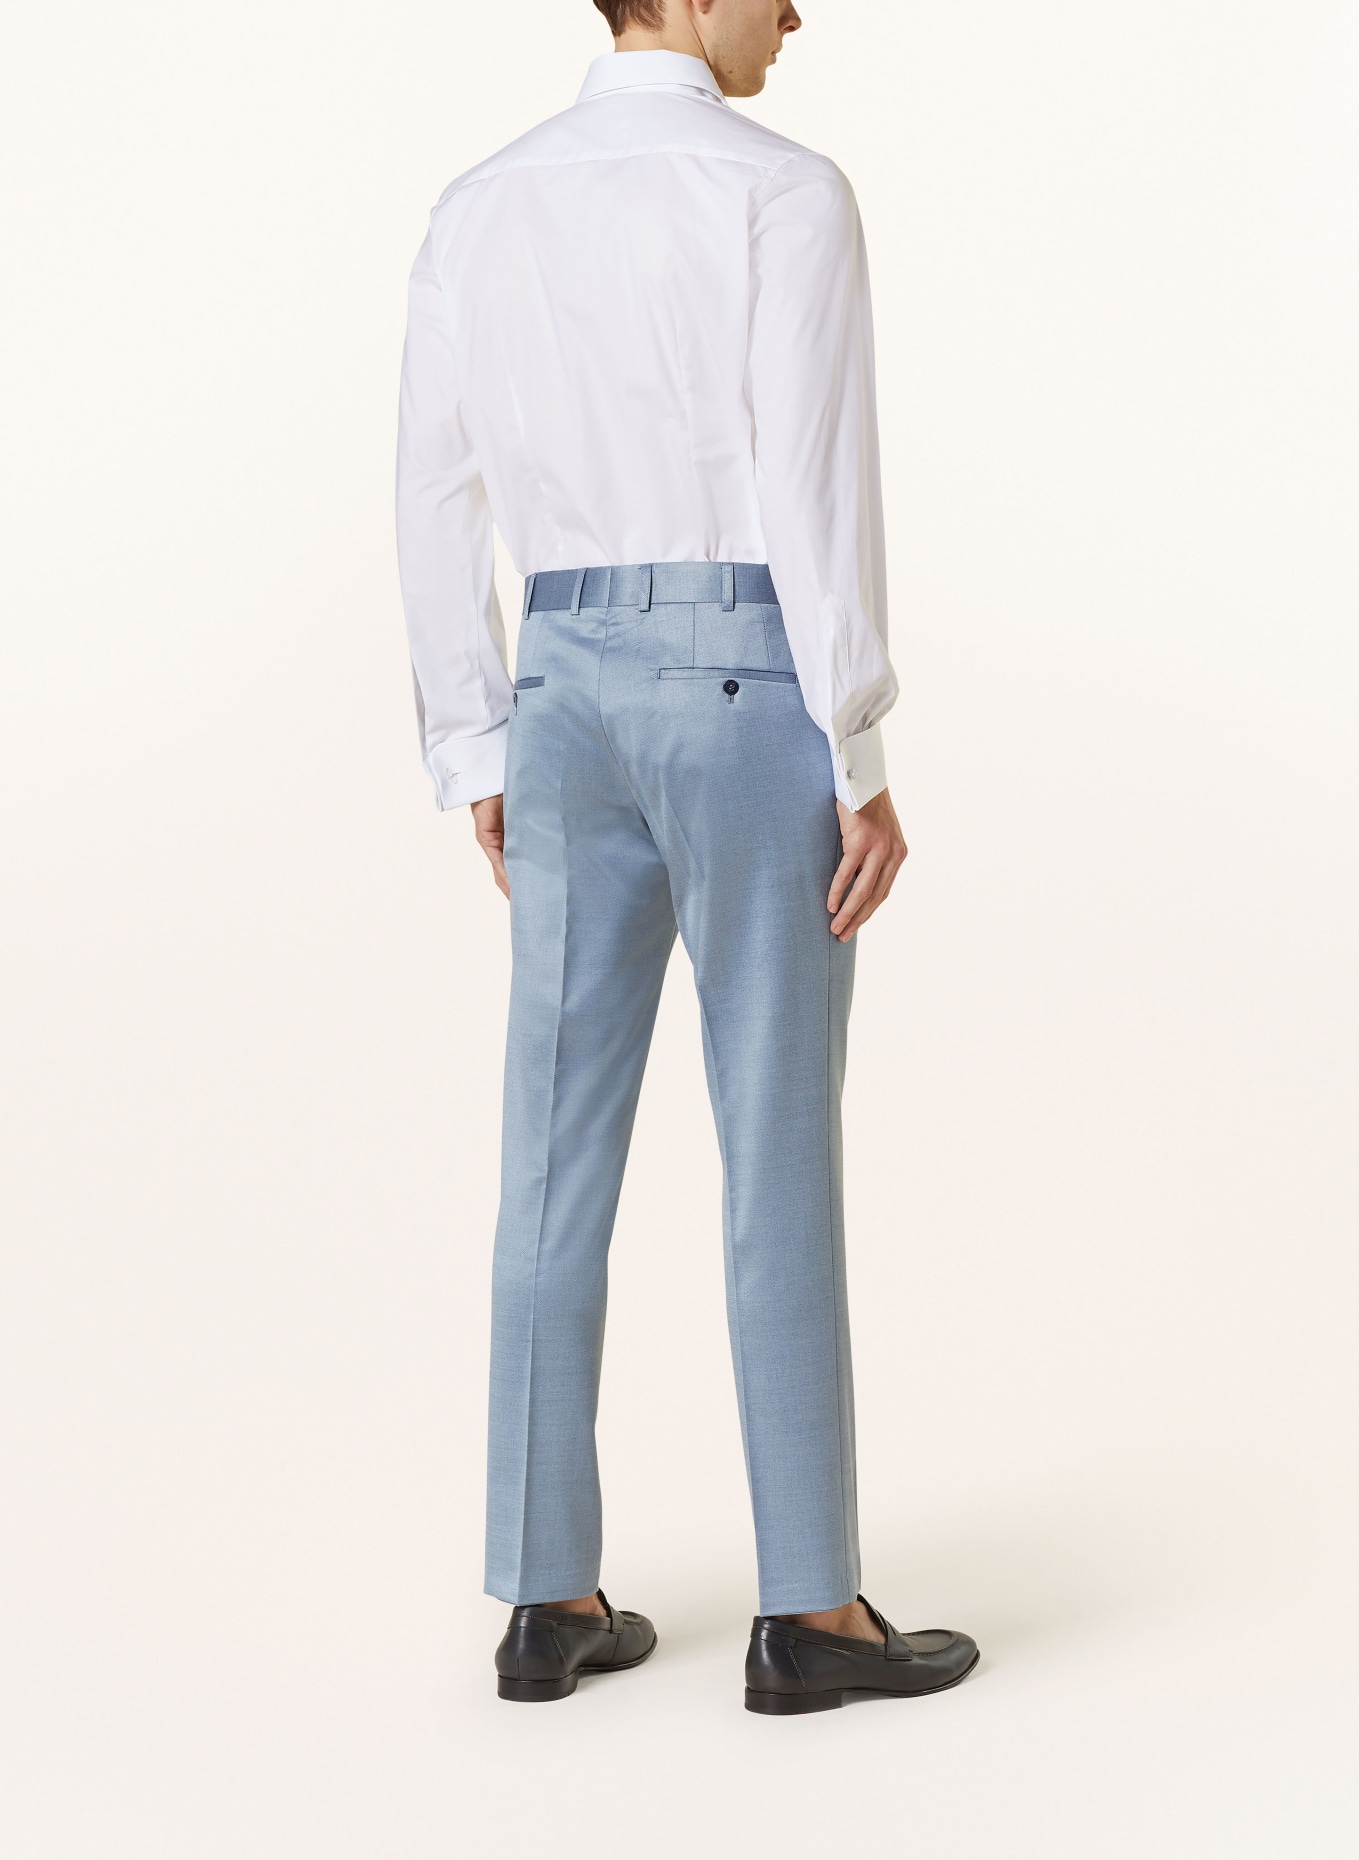 WILVORST Anzughose Slim Fit, Farbe: 036 hell Blau (Bild 4)